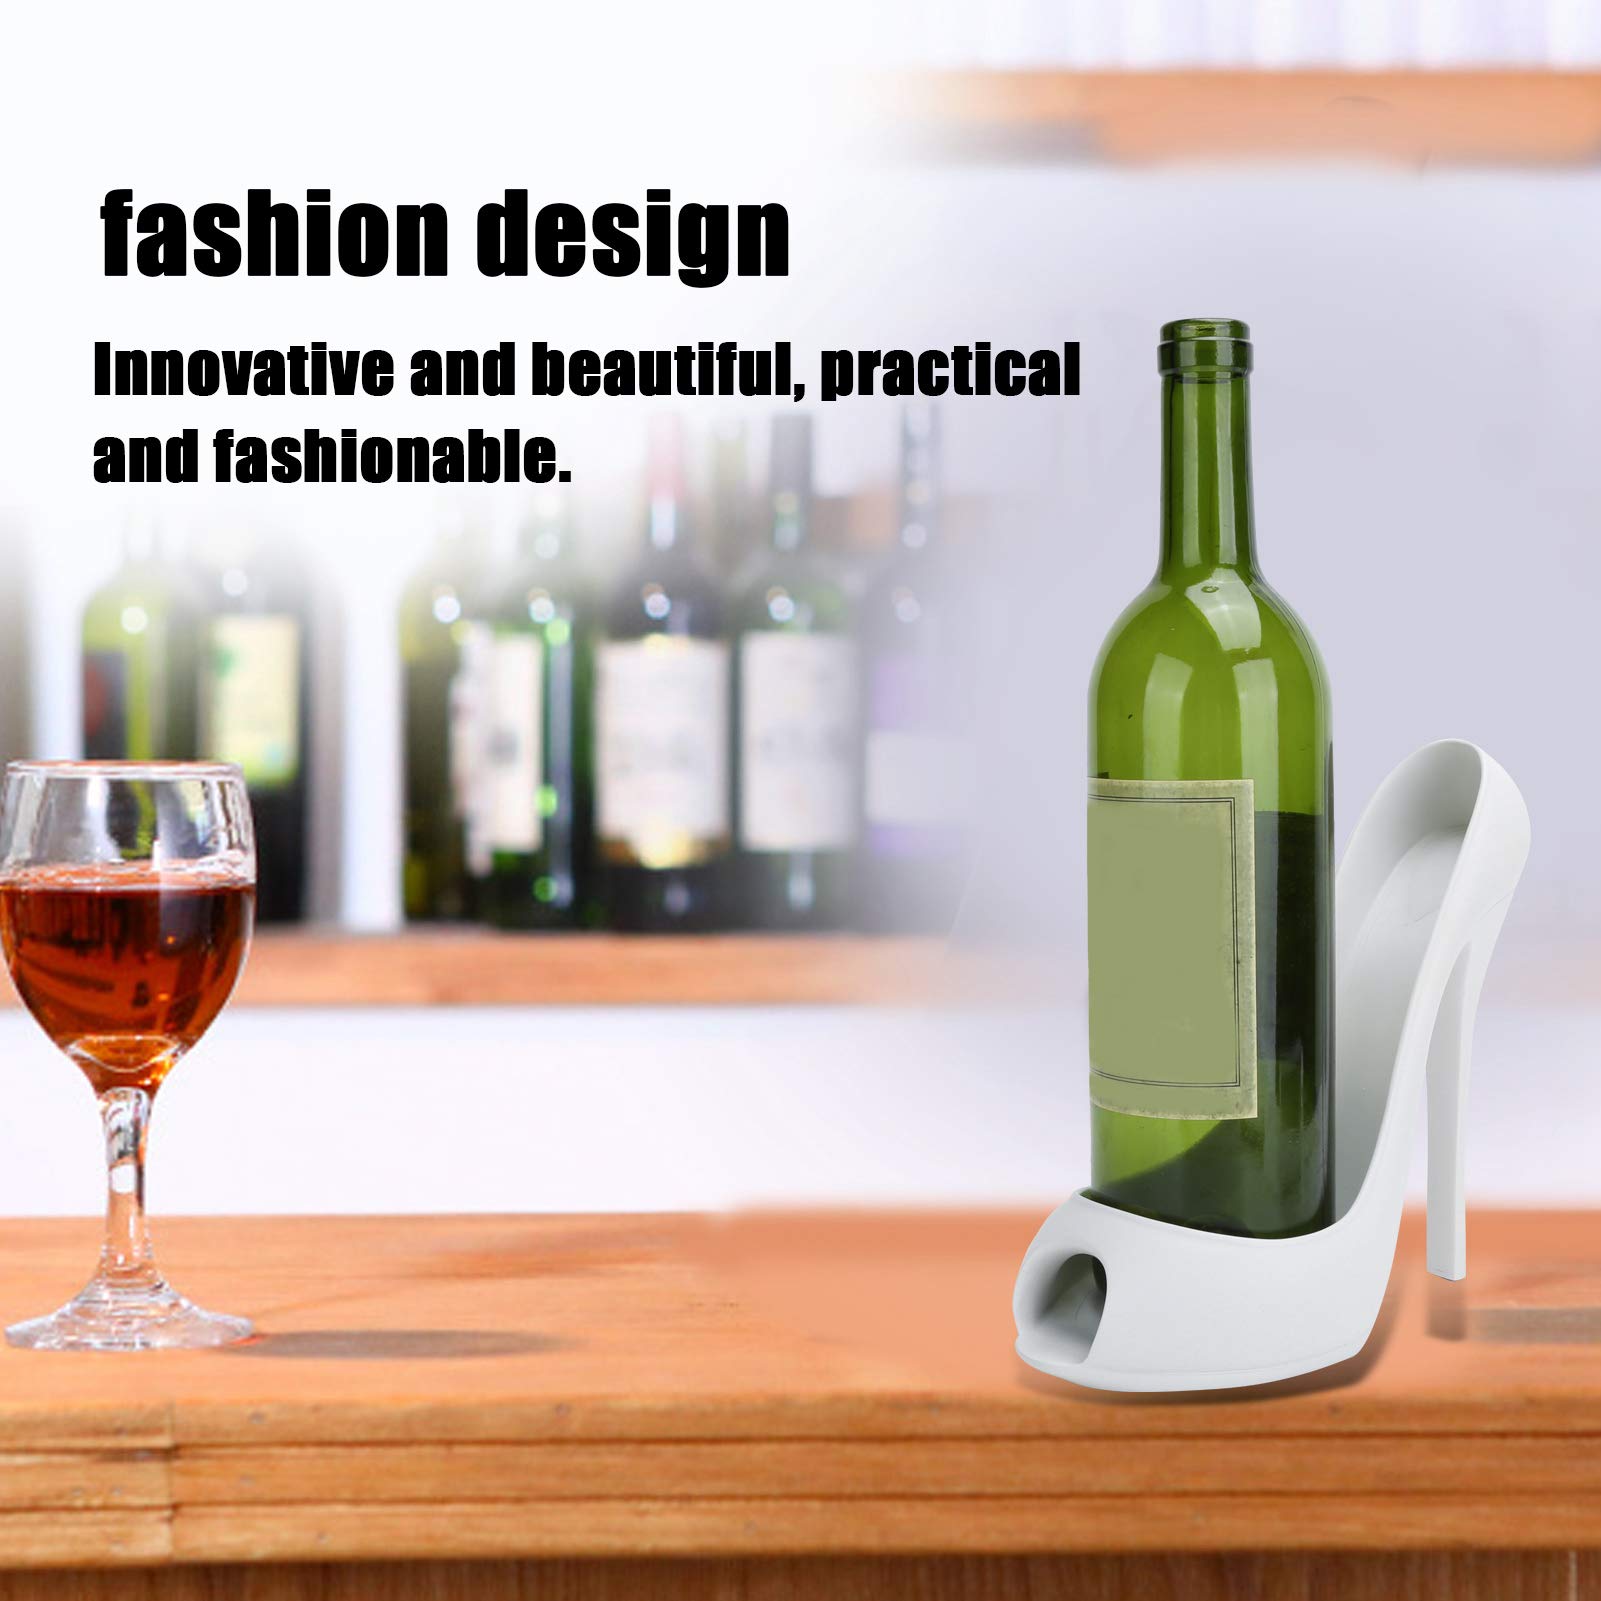 Aqur2020 Shoe Wine Bottle Holder Innovative Wine Rack High Heeled Shoe Shape Wine Bottle Display Holder Home Decoration Accessories(White)